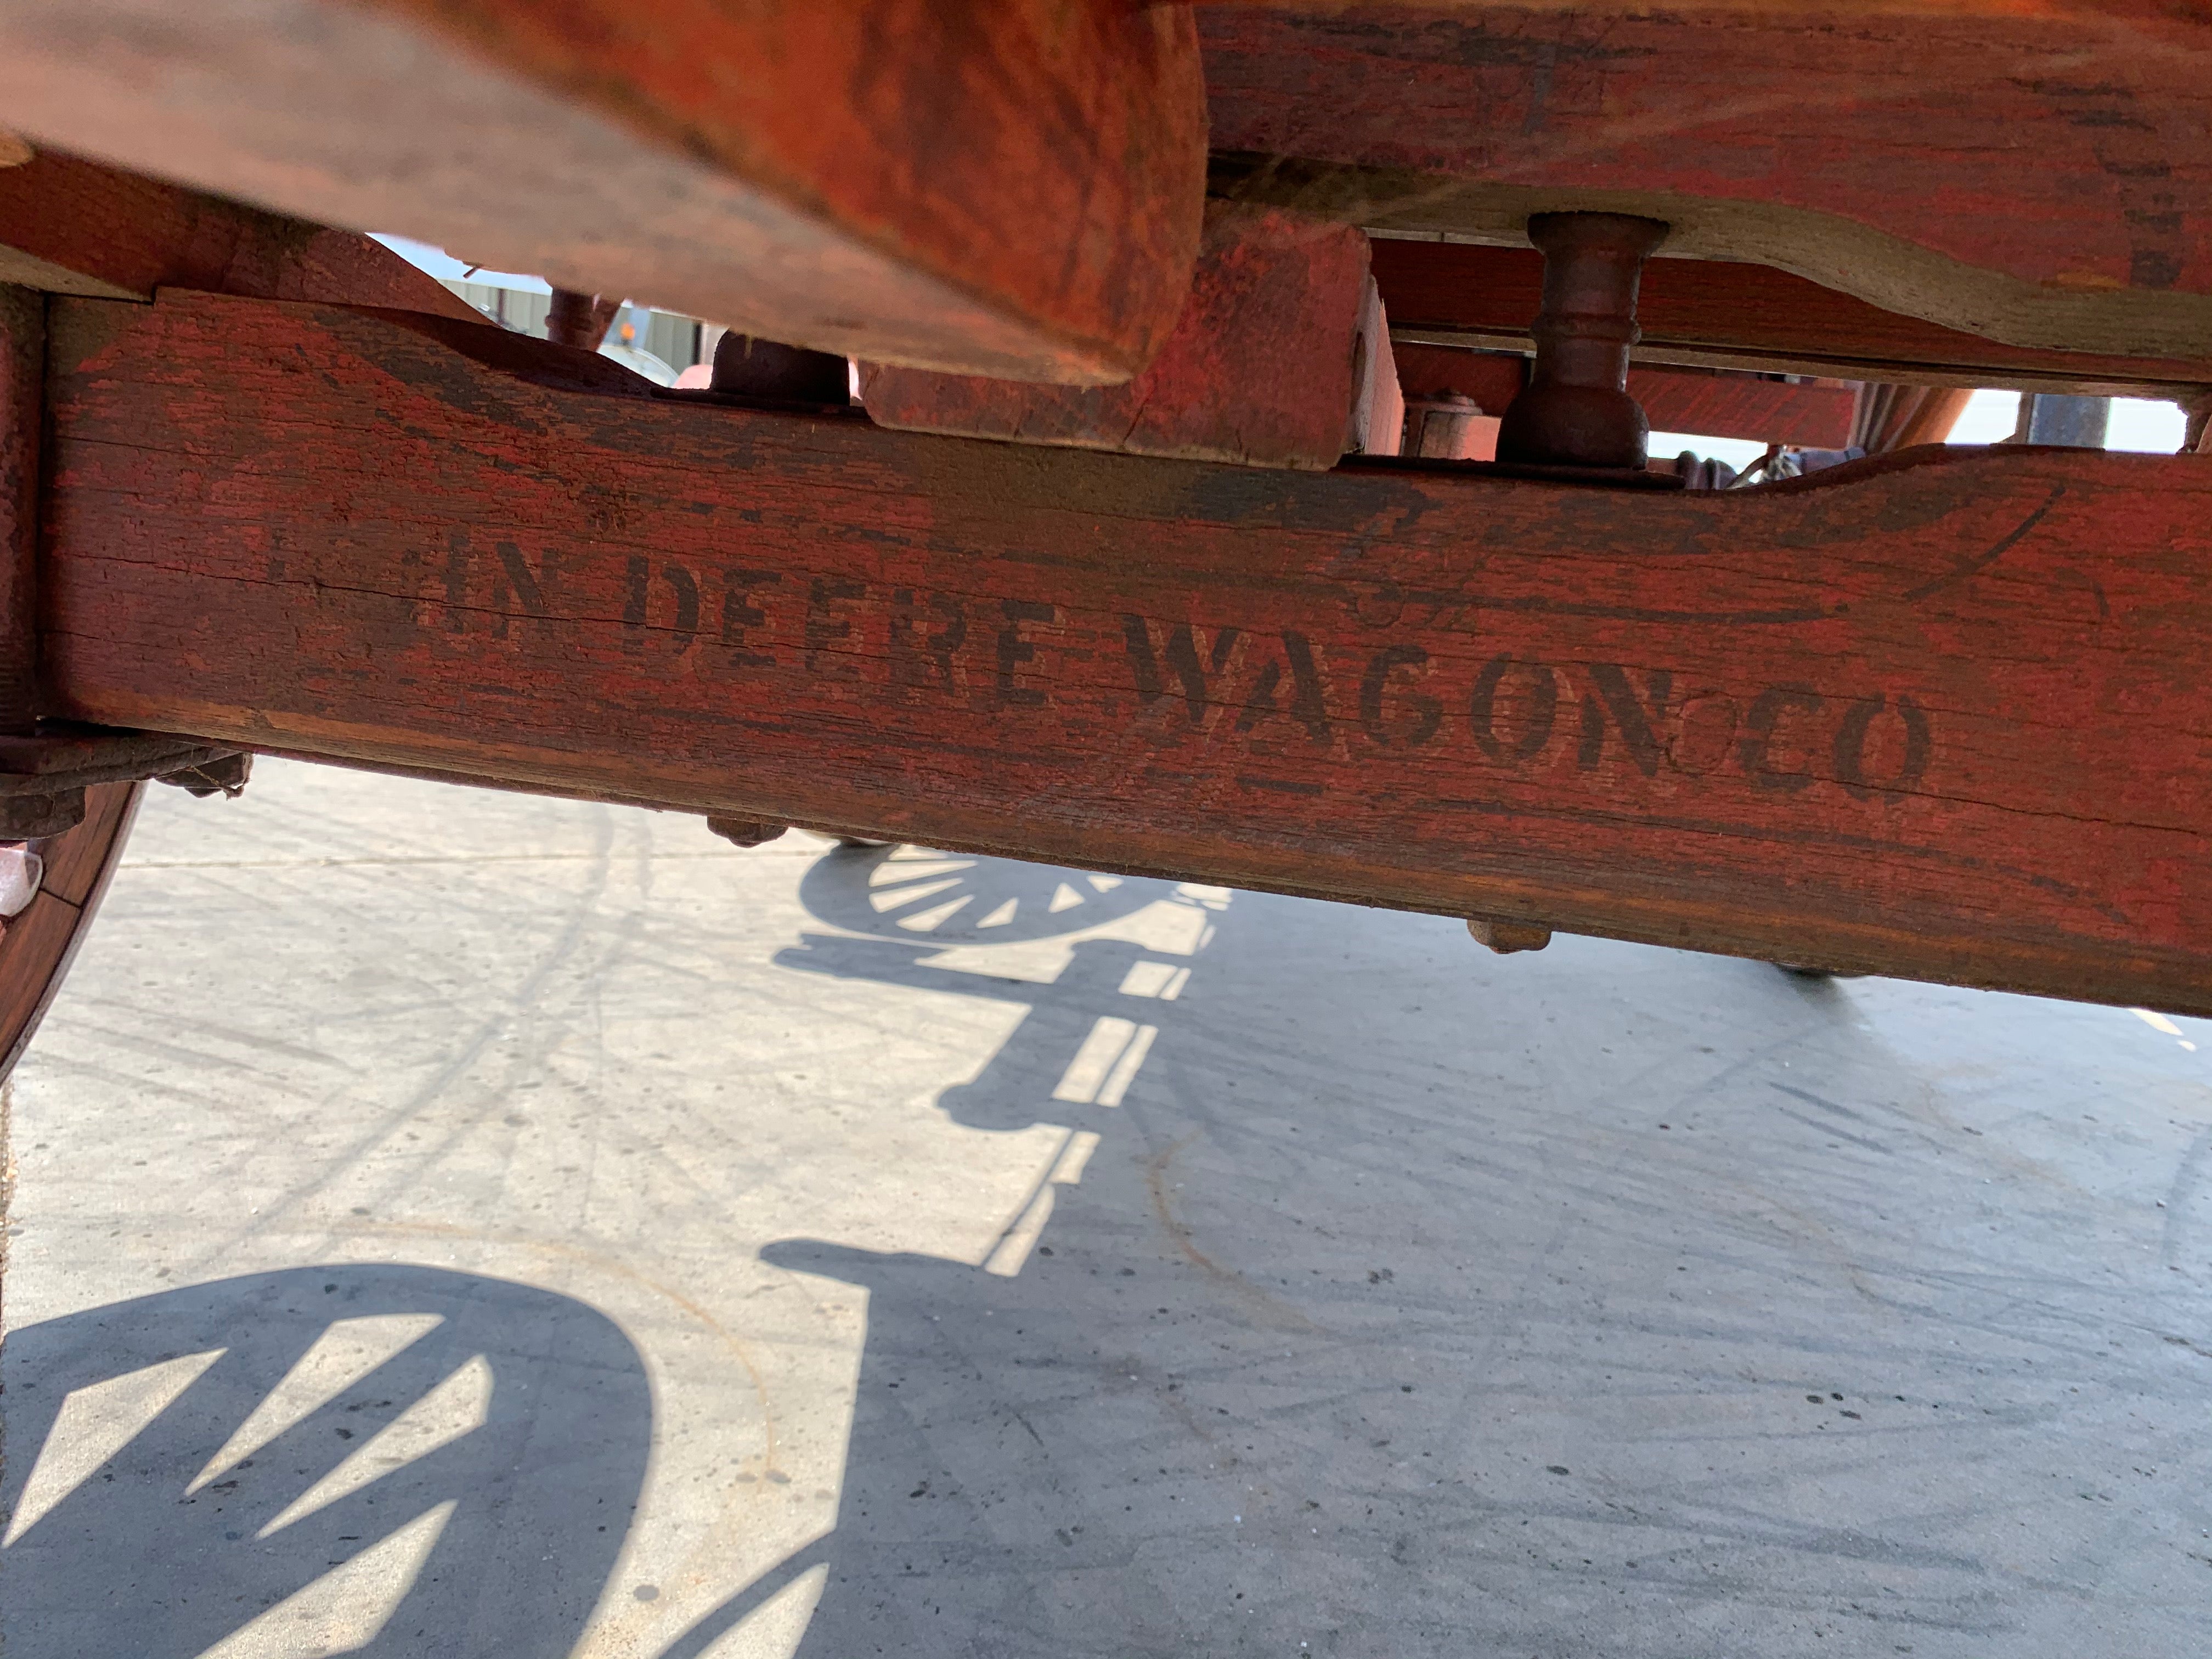 SOLD-#300 Rare John Deere High Wide Wheel Display Wagon